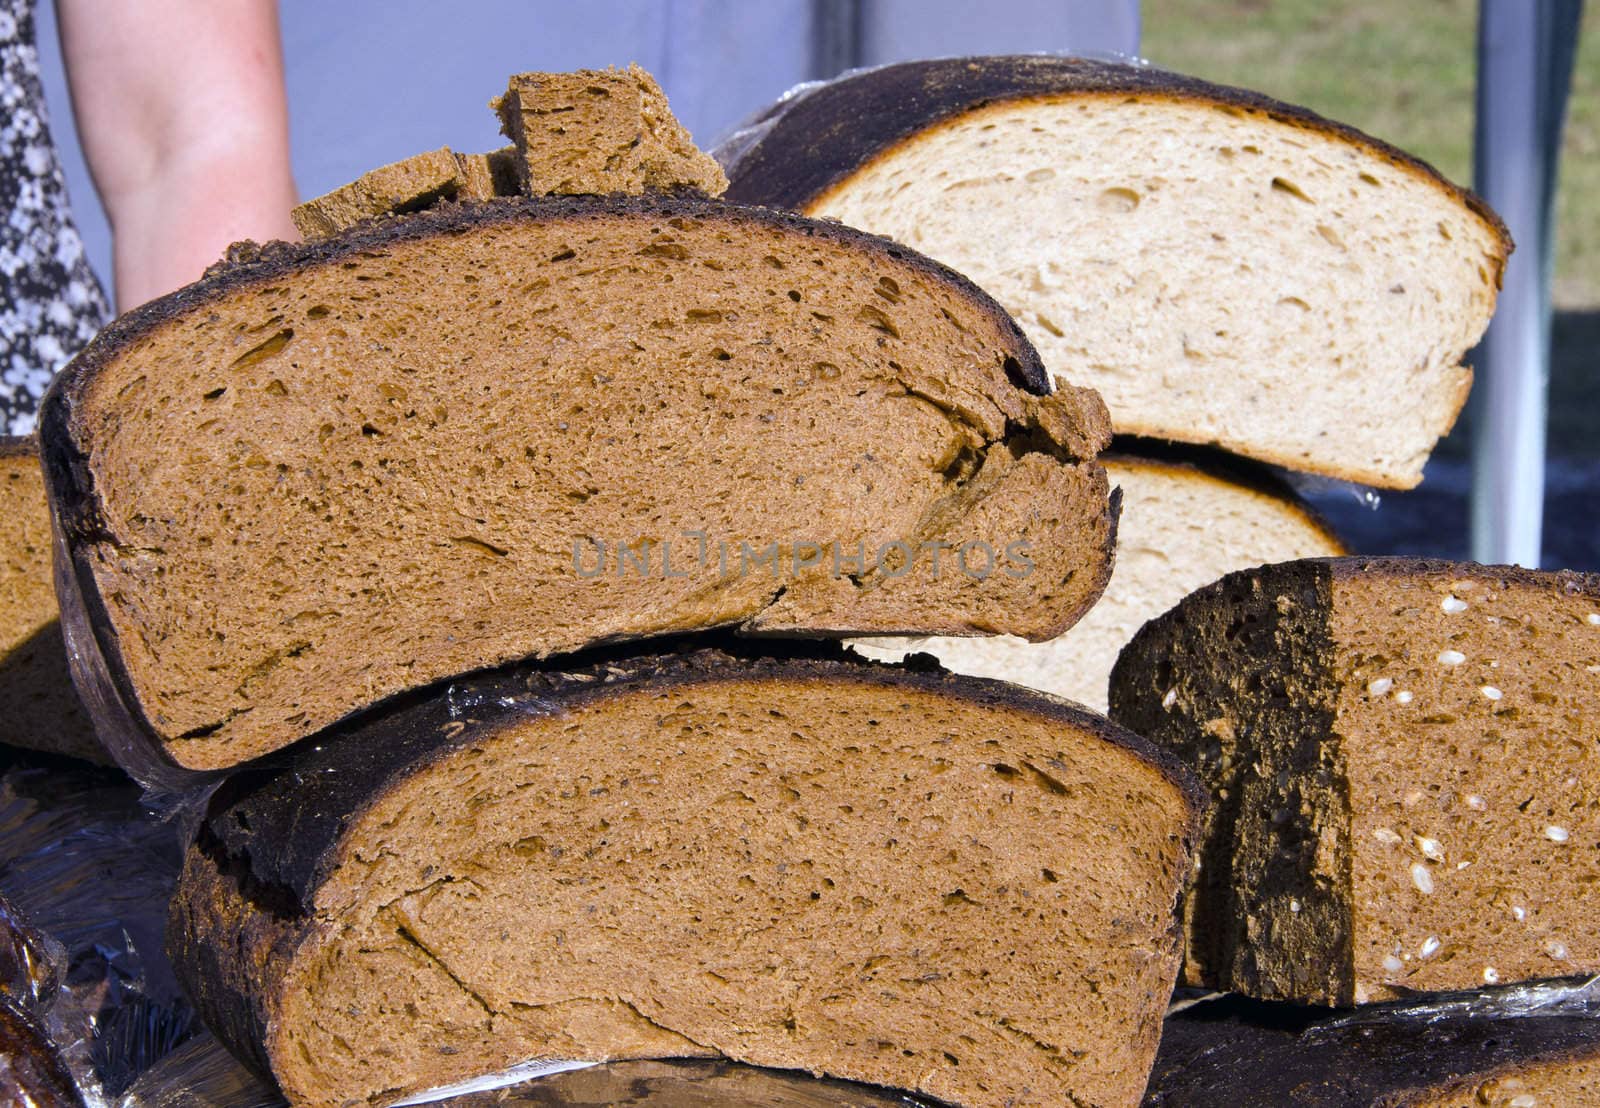 Fresh baked rustic bread sold in street fair market.